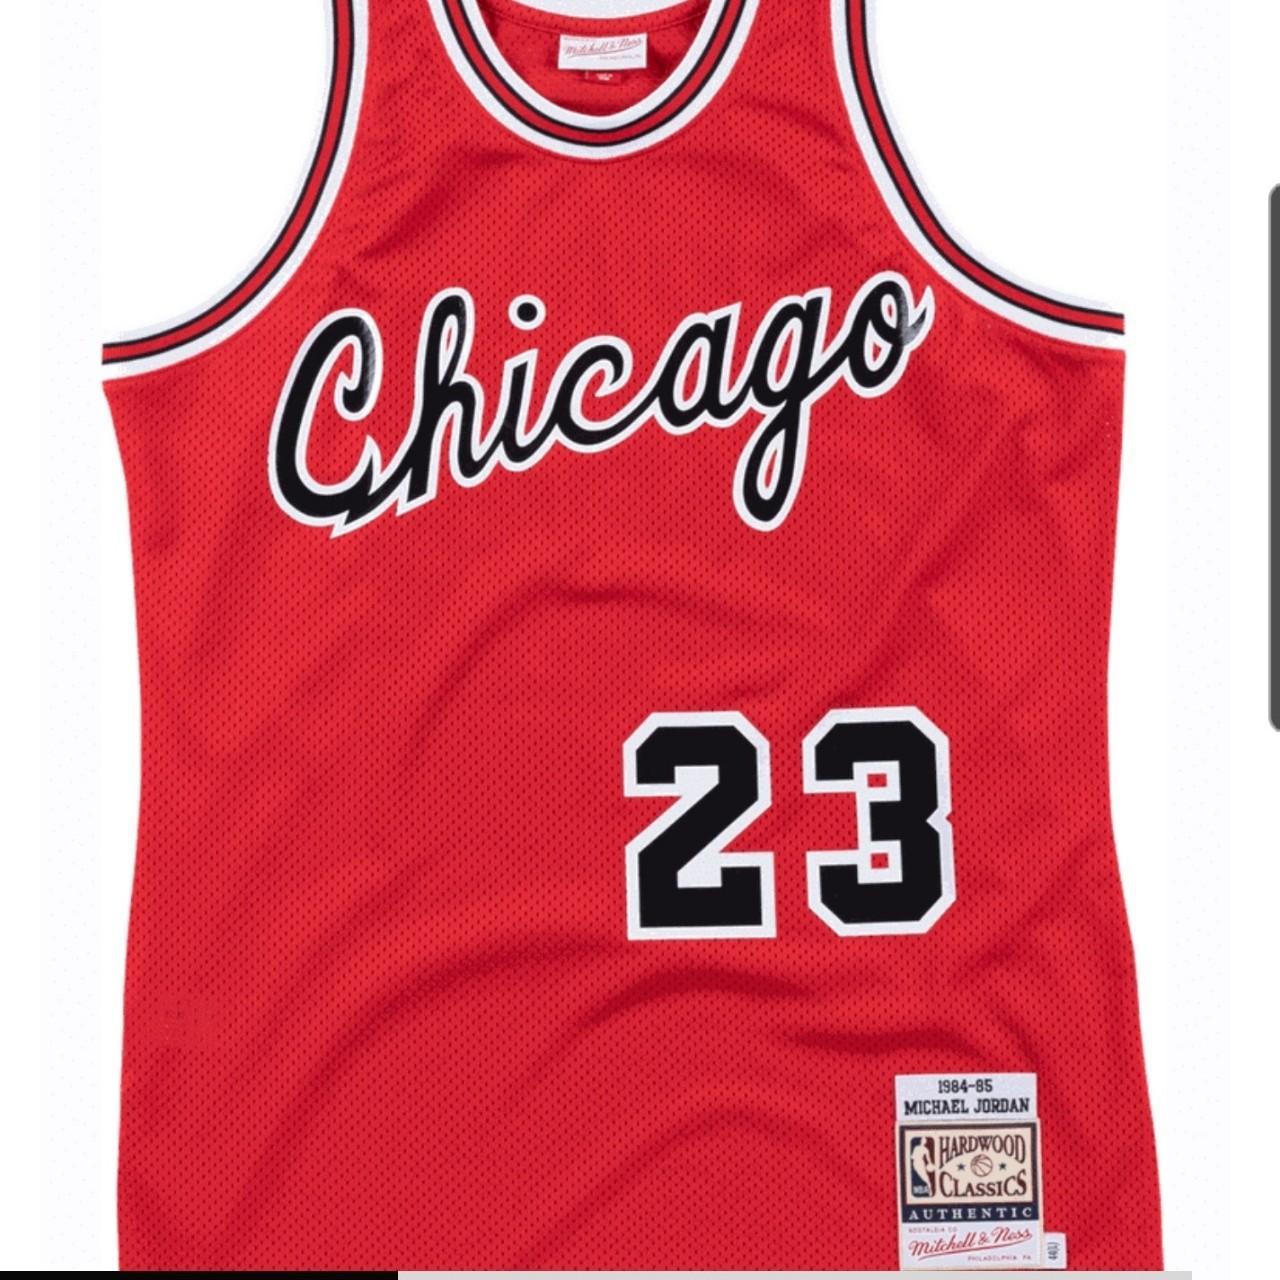 Authentic Jersey Chicago Bulls 1984-85 Michael Jordan - Shop